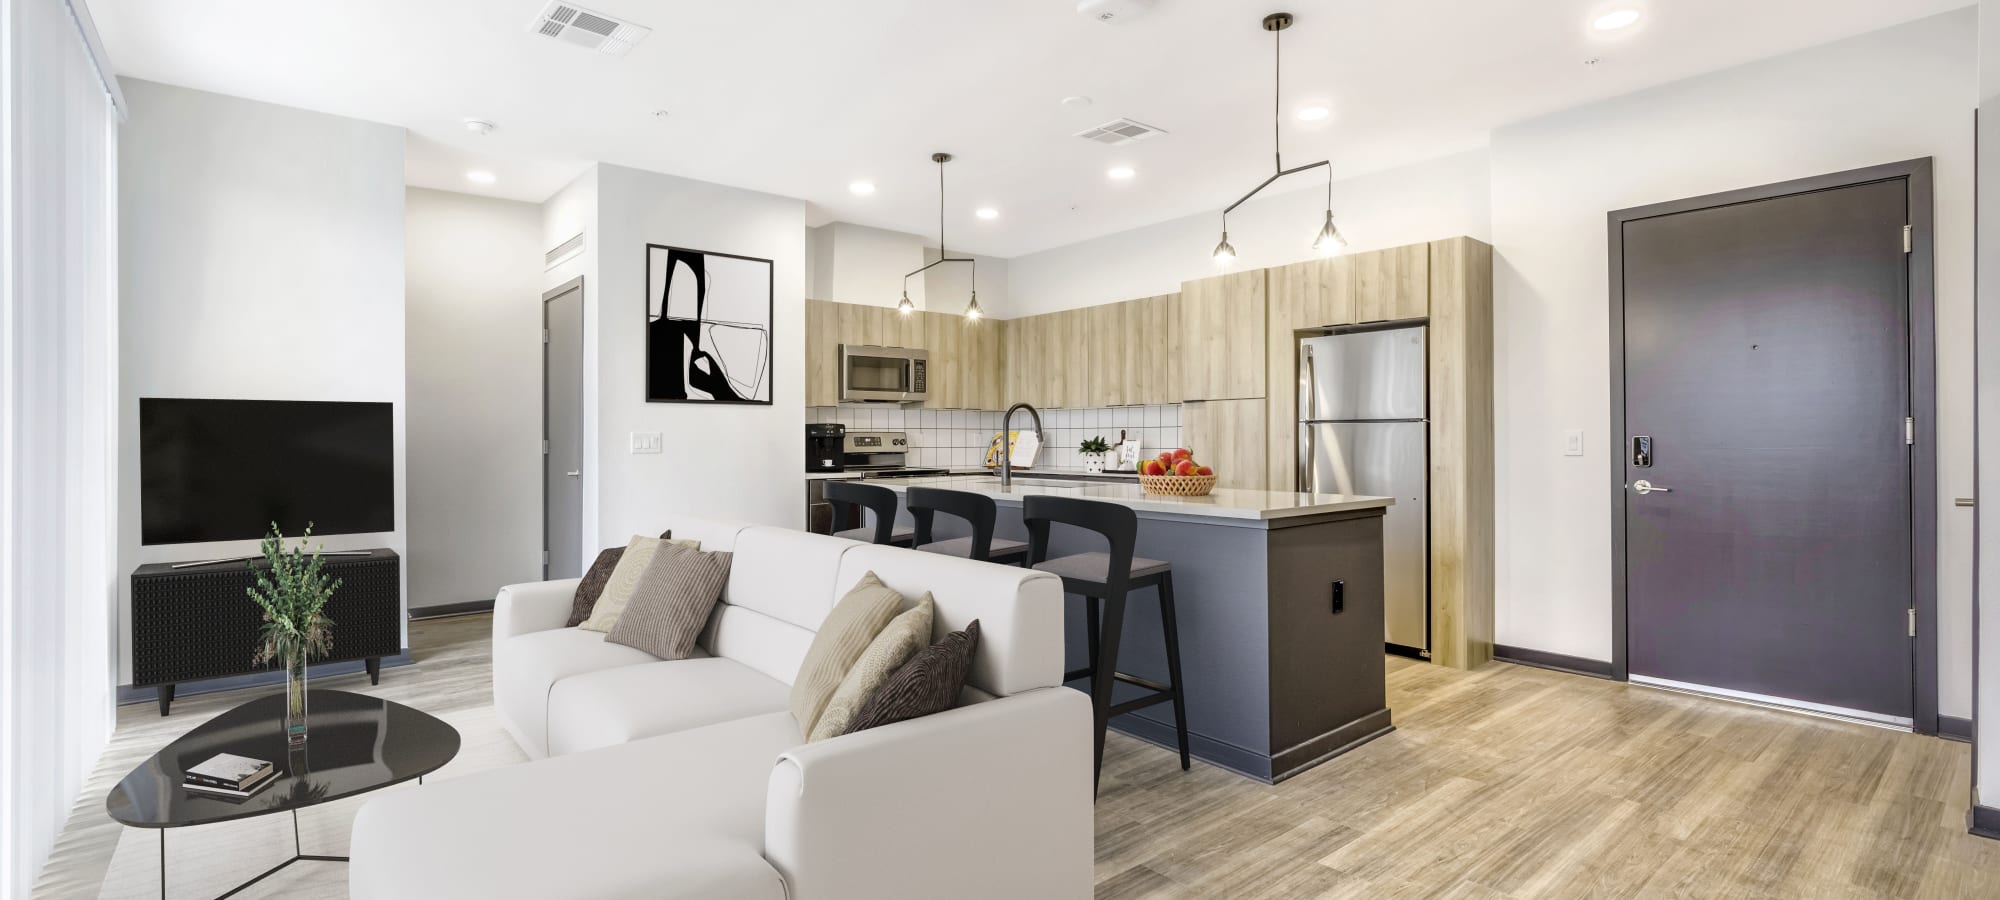 Enjoy luxurious apartments at Banyan on Washington in Phoenix, Arizona